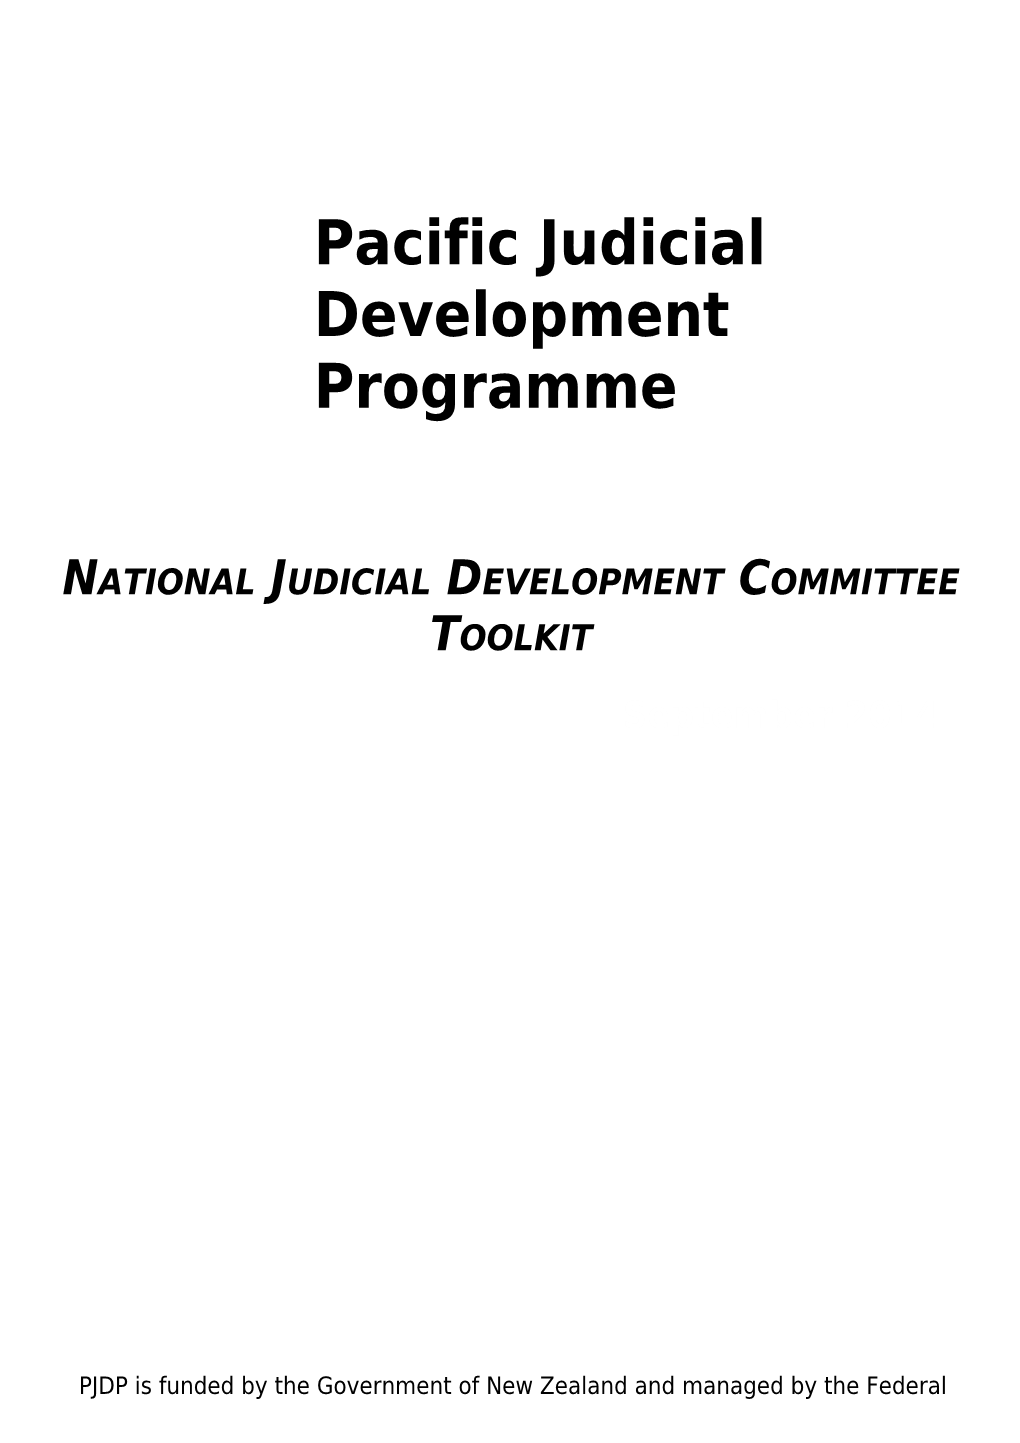 National Judicial Development Committee Toolkit